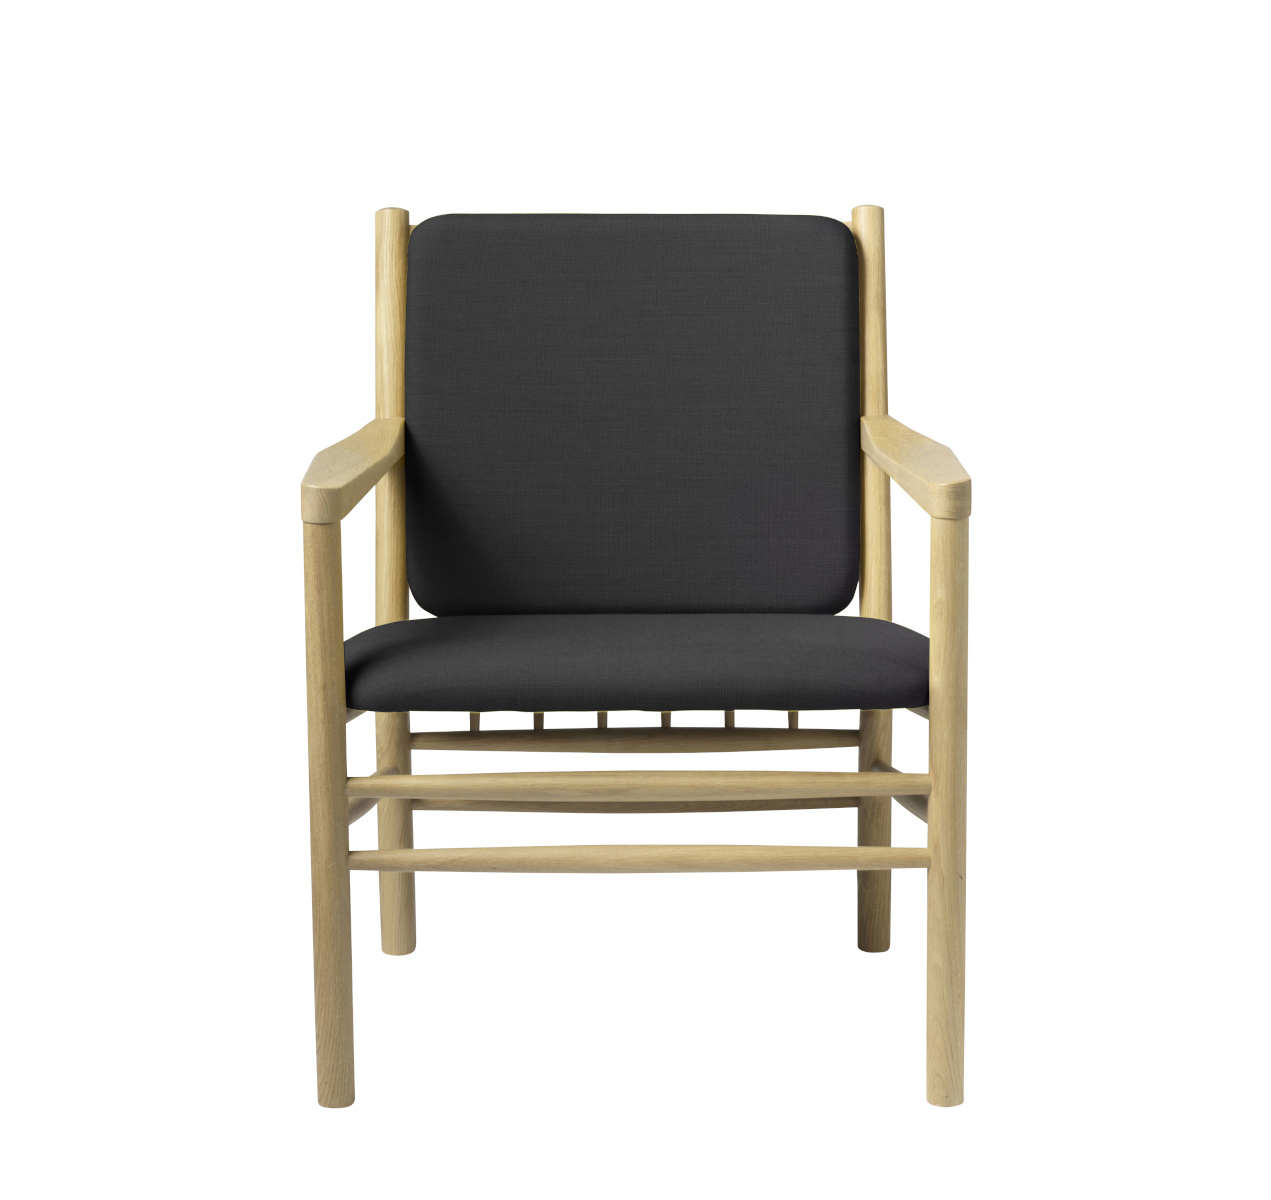 J147 Sessel, eiche natur / beige